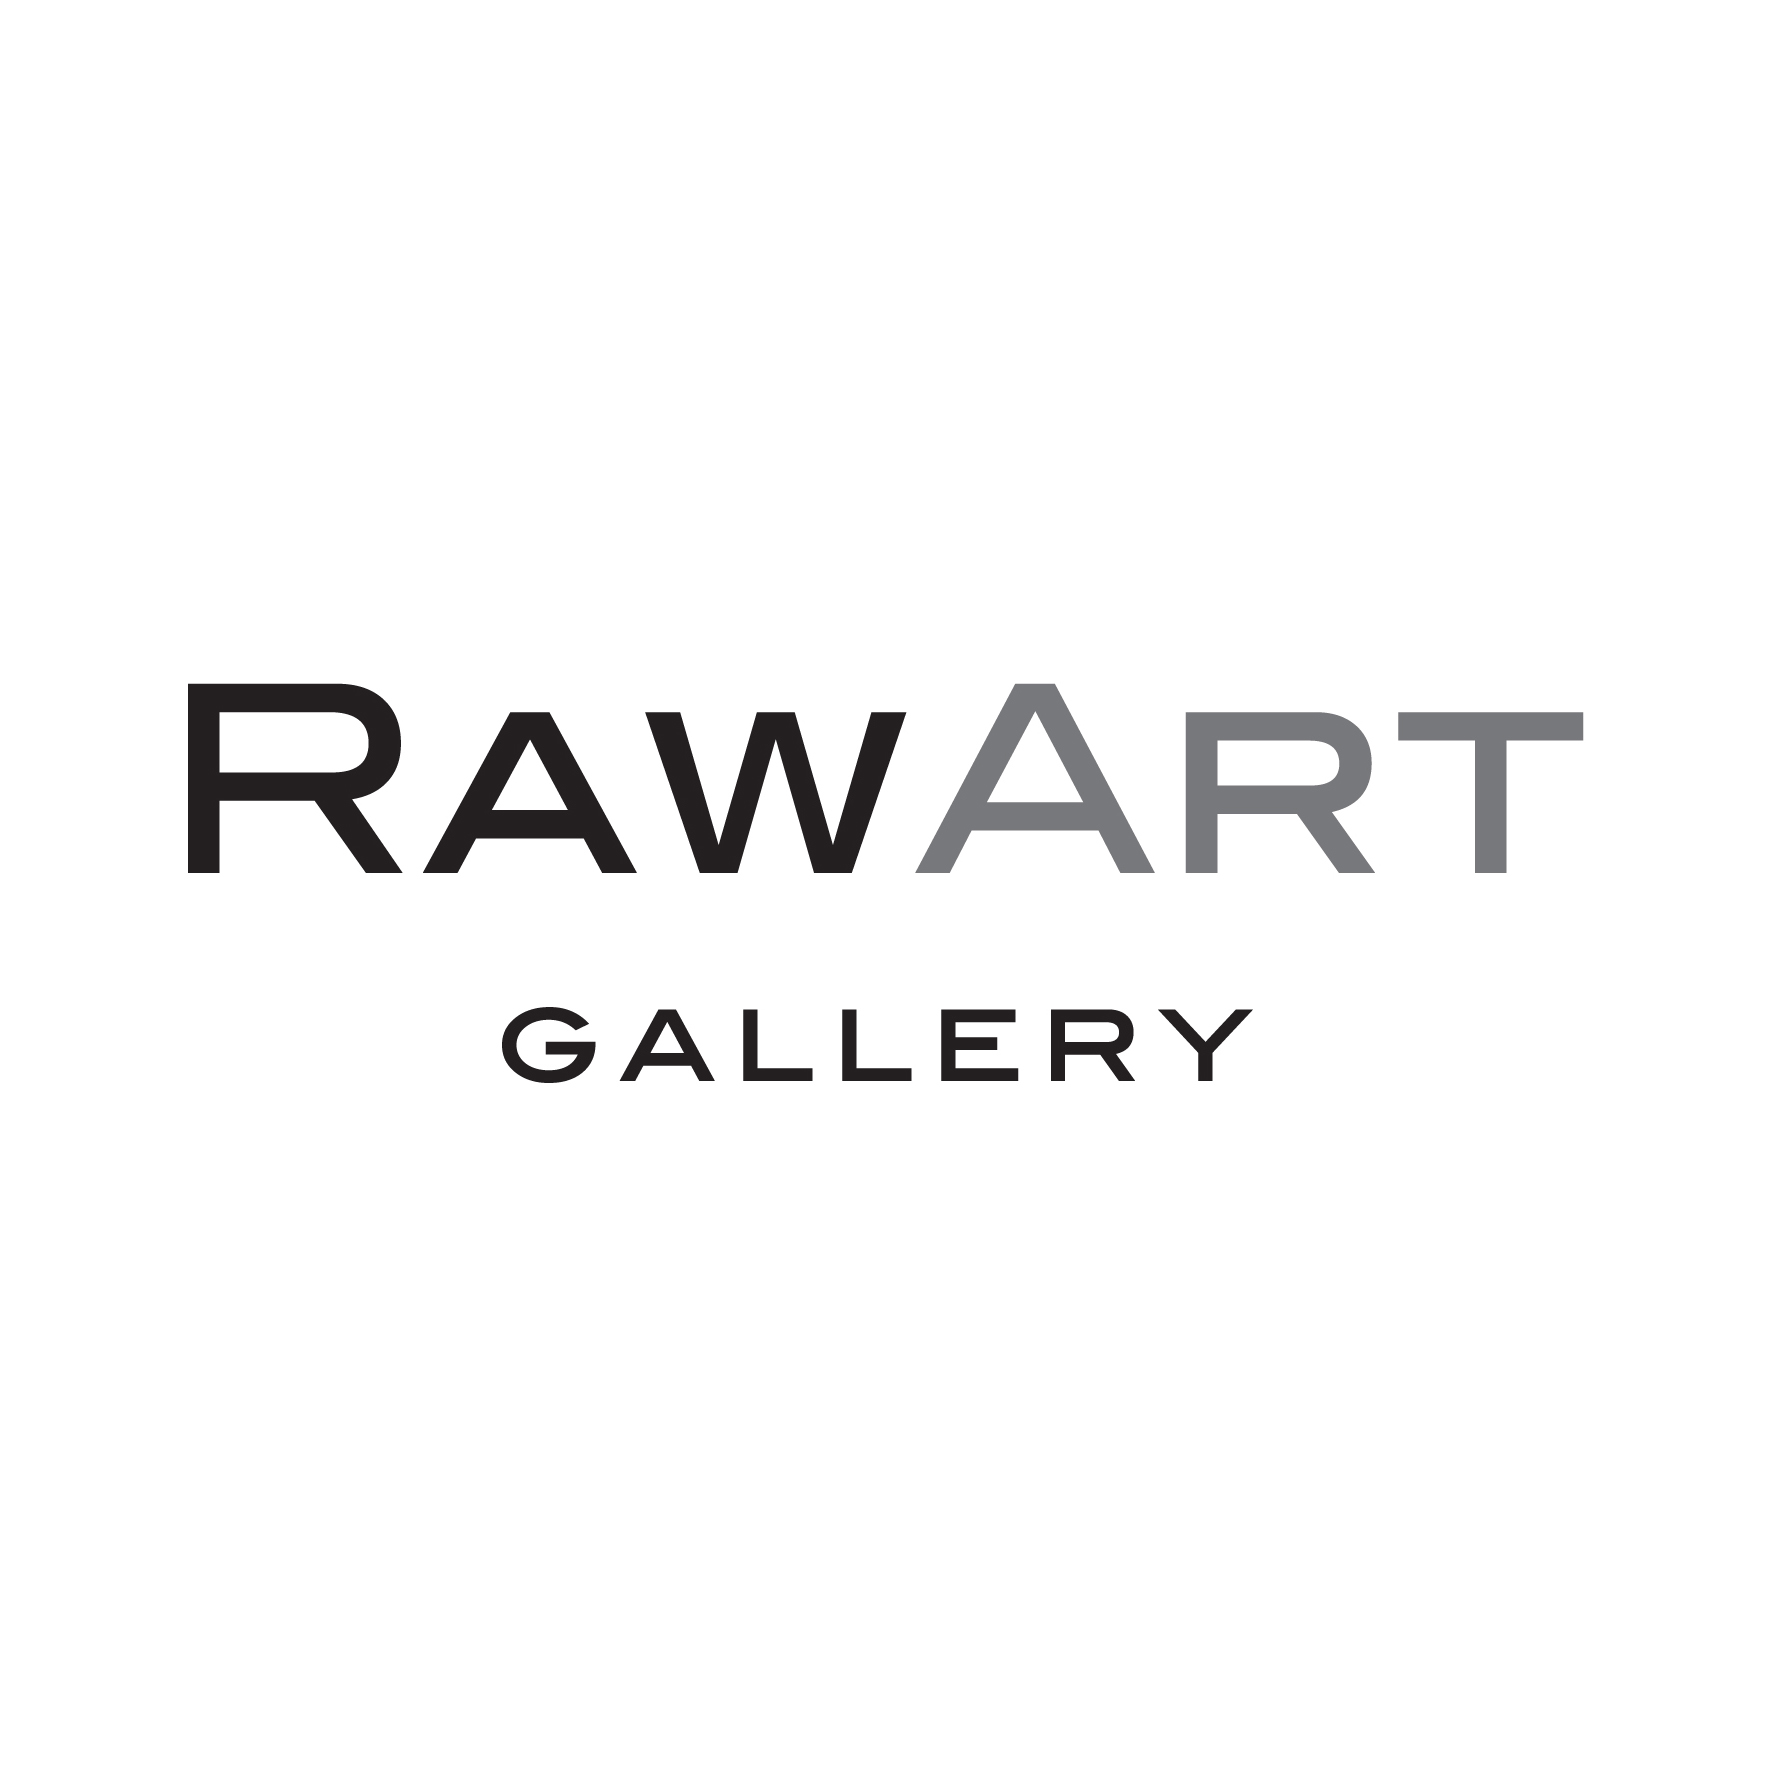 Raw Art Gallery